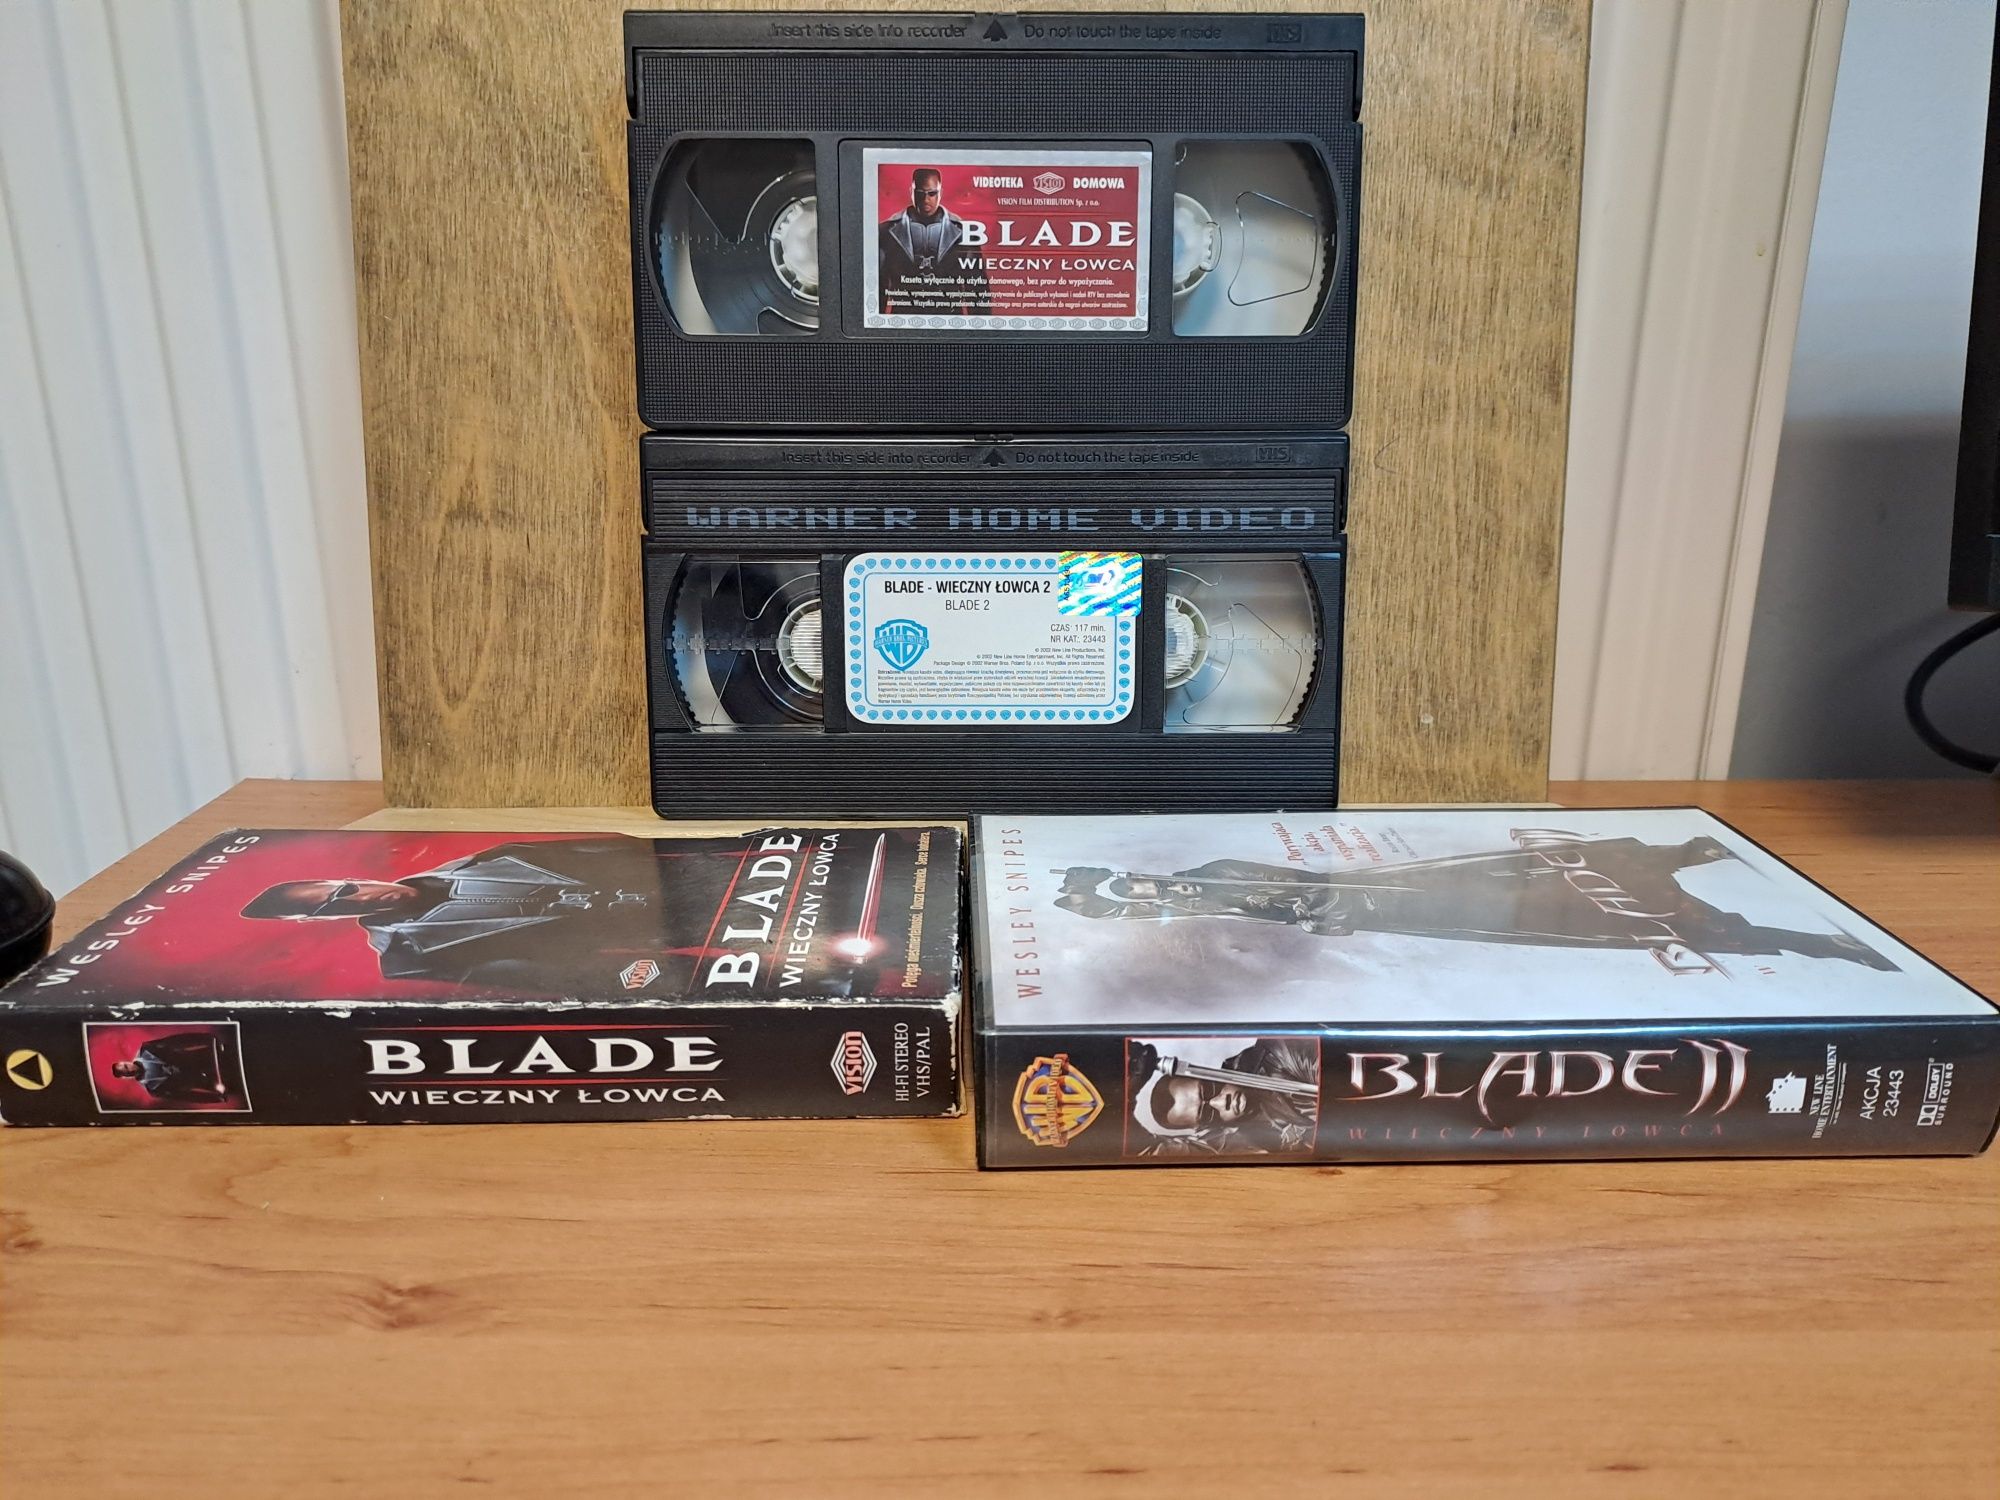 Blade część 1 i 2 VHS